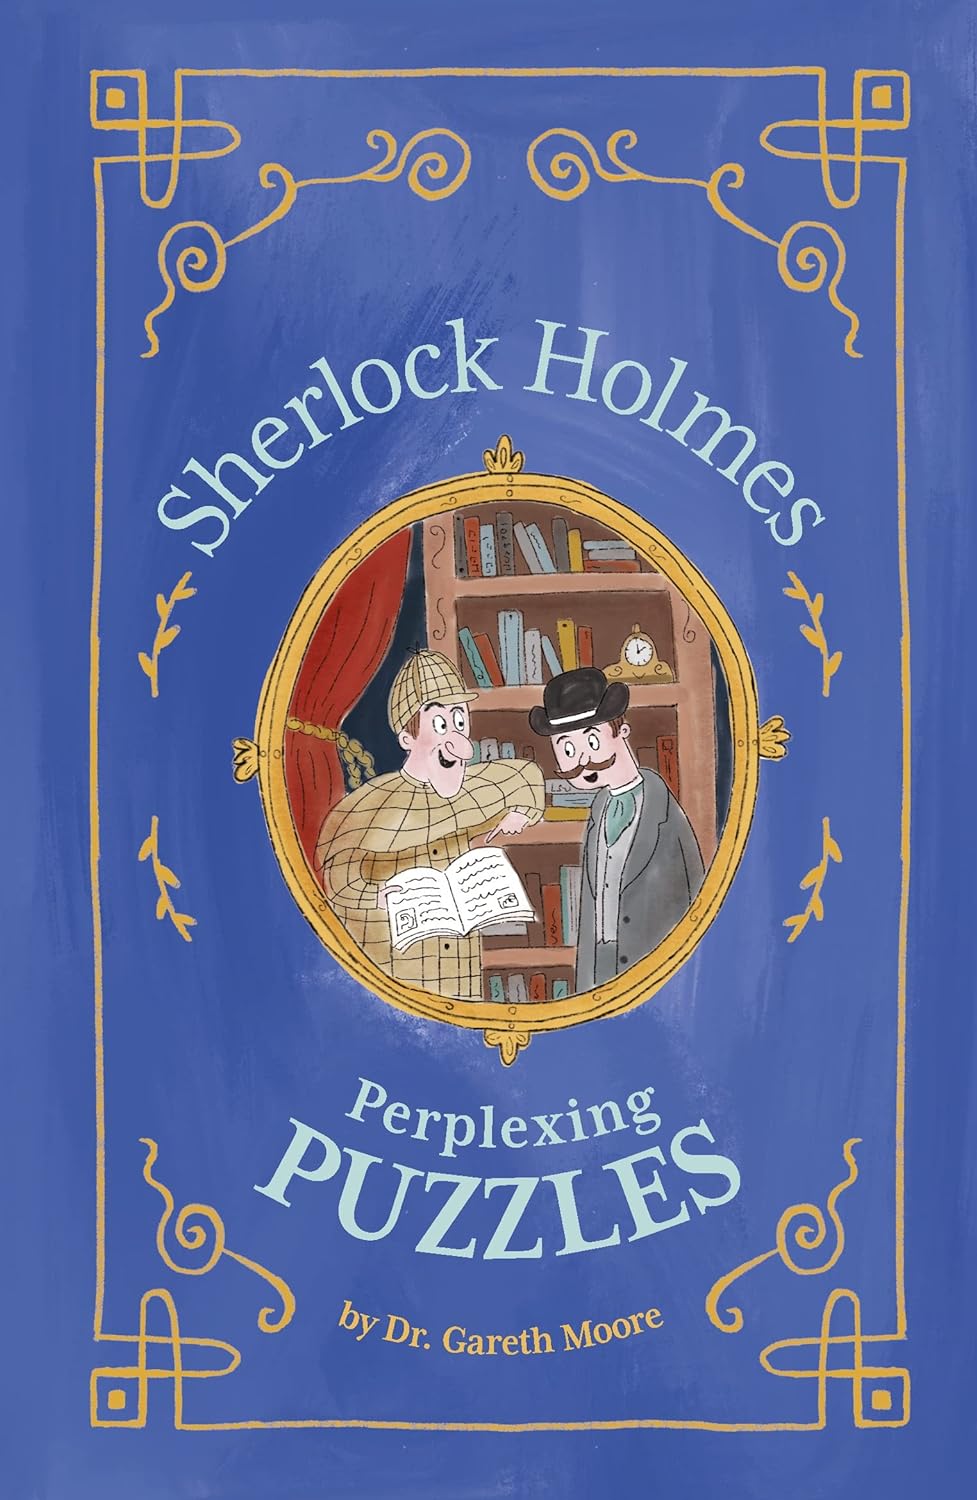 Sherlock Holmes Perplexing Puz